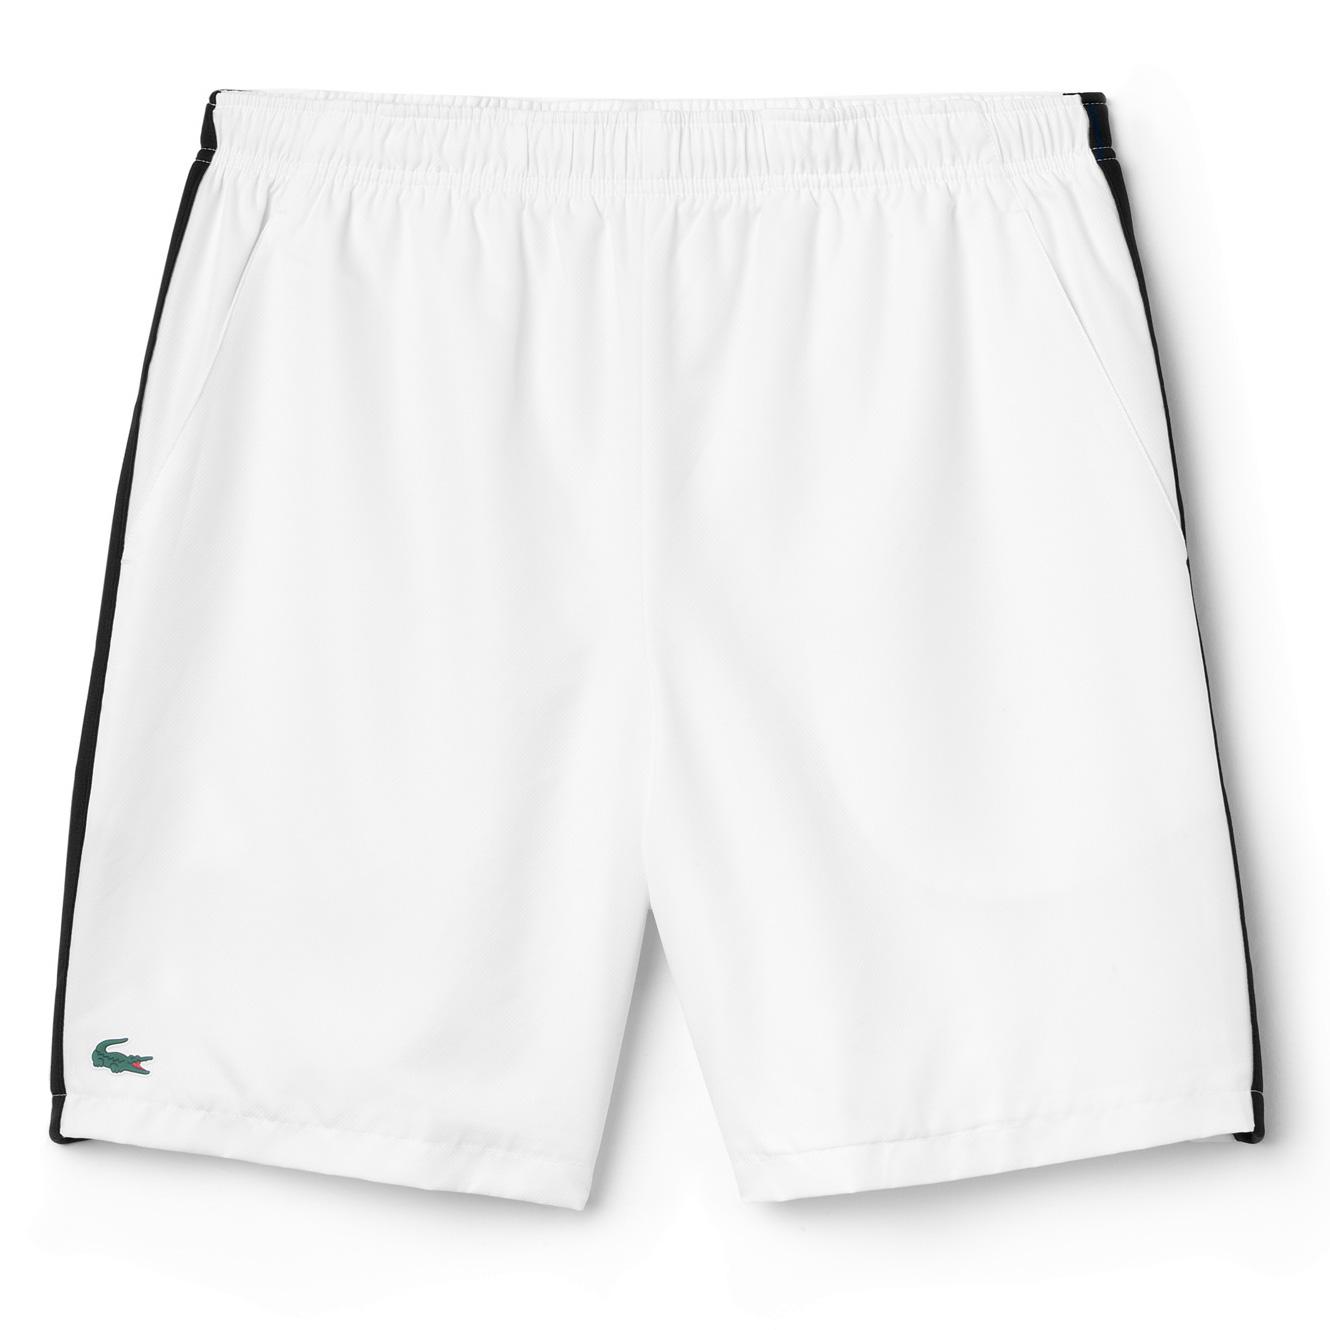 Lacoste Sport Mens Mesh Panel Tennis Shorts - White - Tennisnuts.com